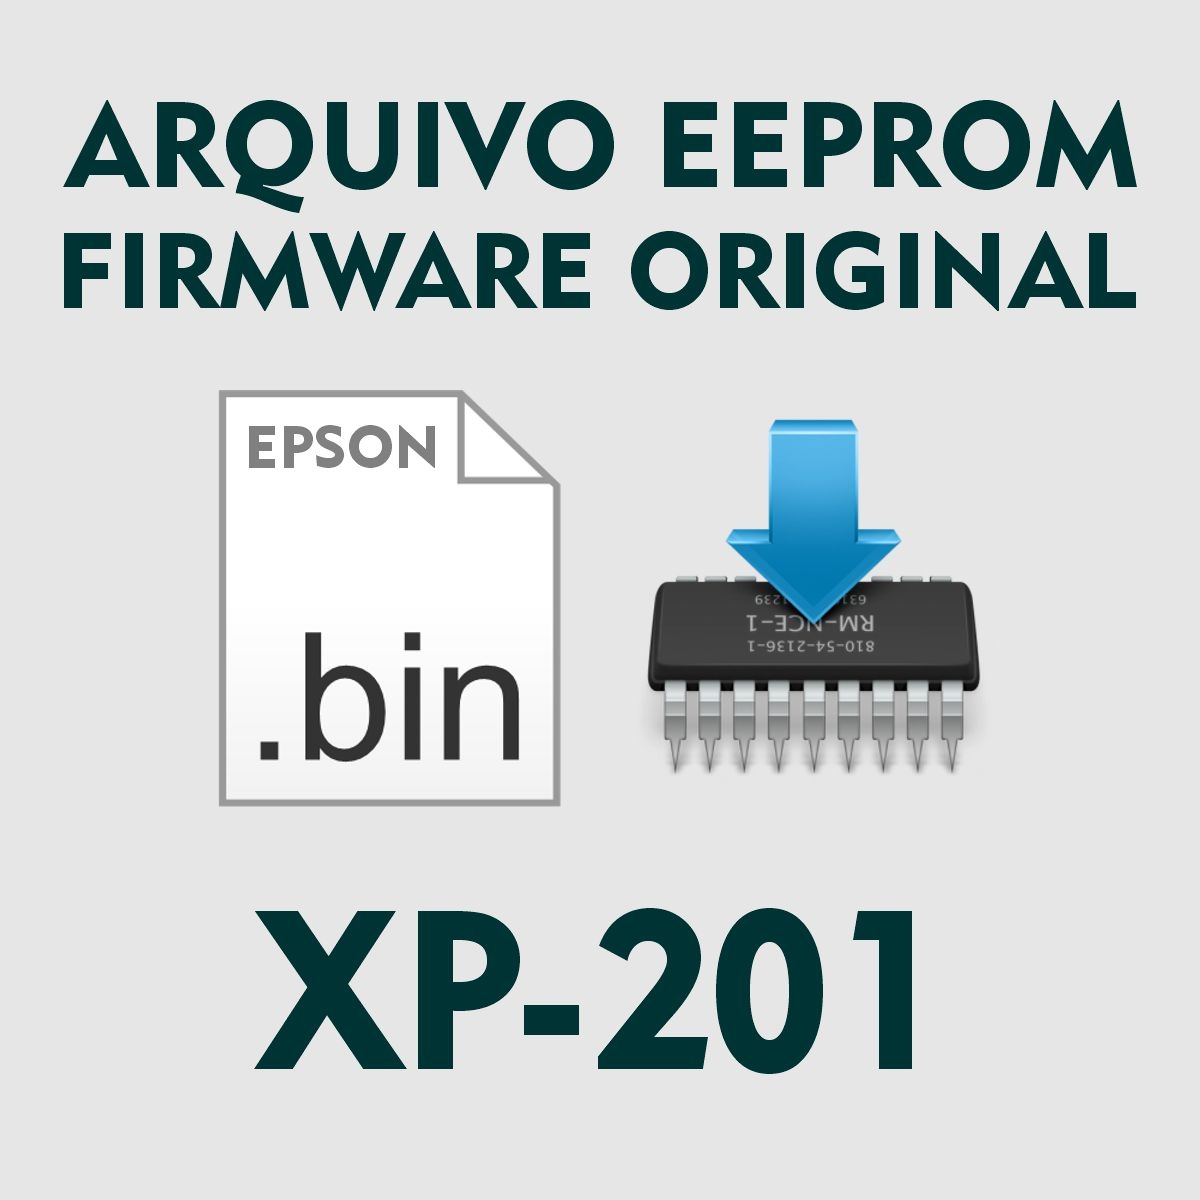 Epson XP-201 | Arquivo de Eeprom Firmware .bin - Original